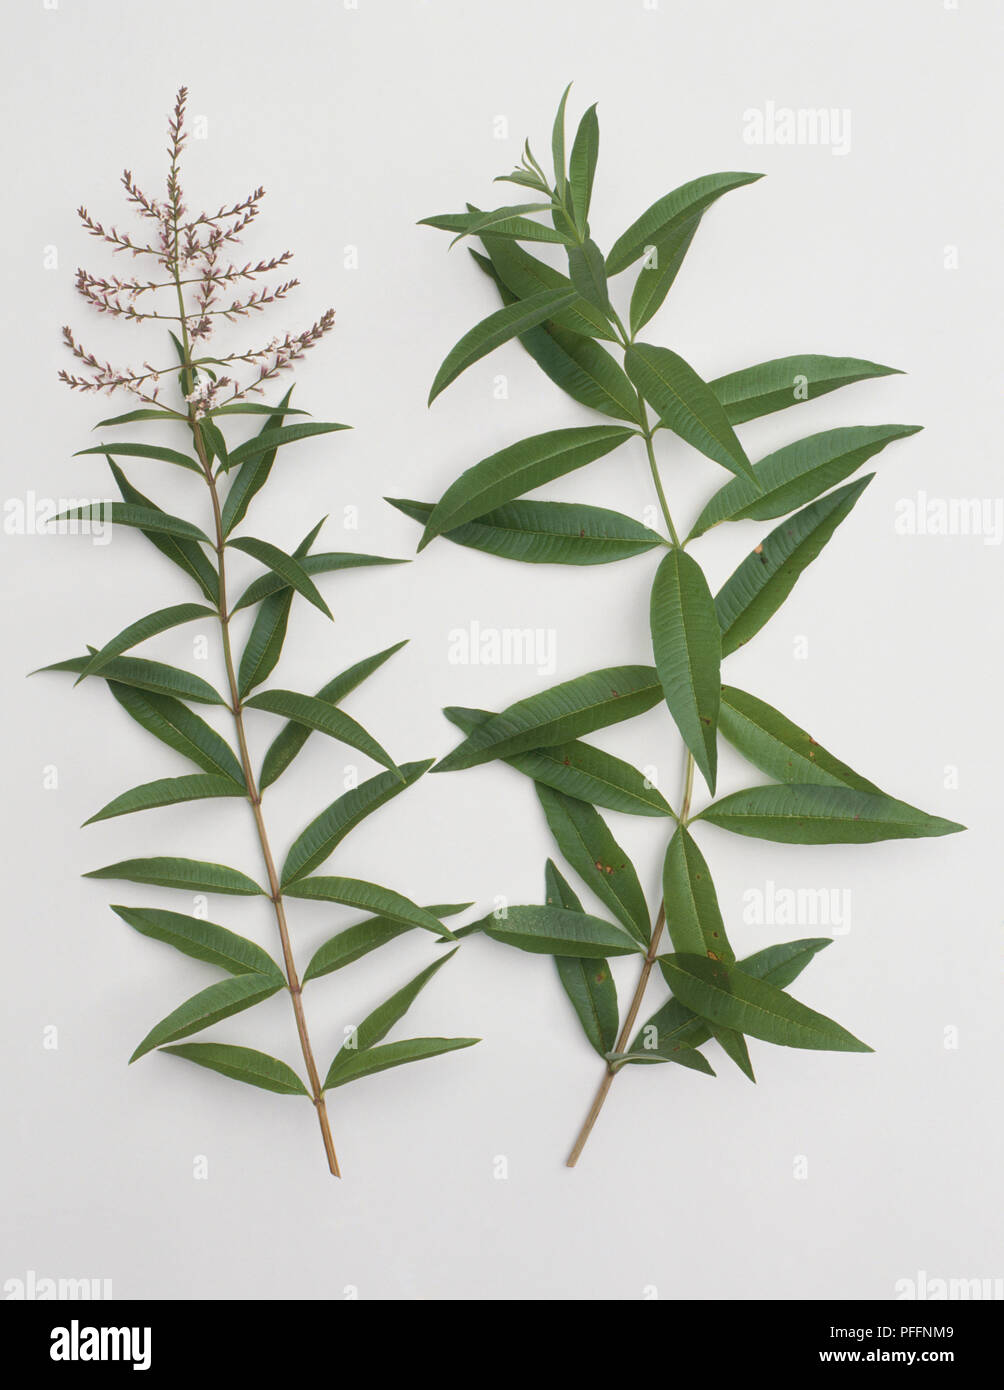 Aloysia triphylla (Lemon verbena), flowering stem and stem with leaves Stock Photo